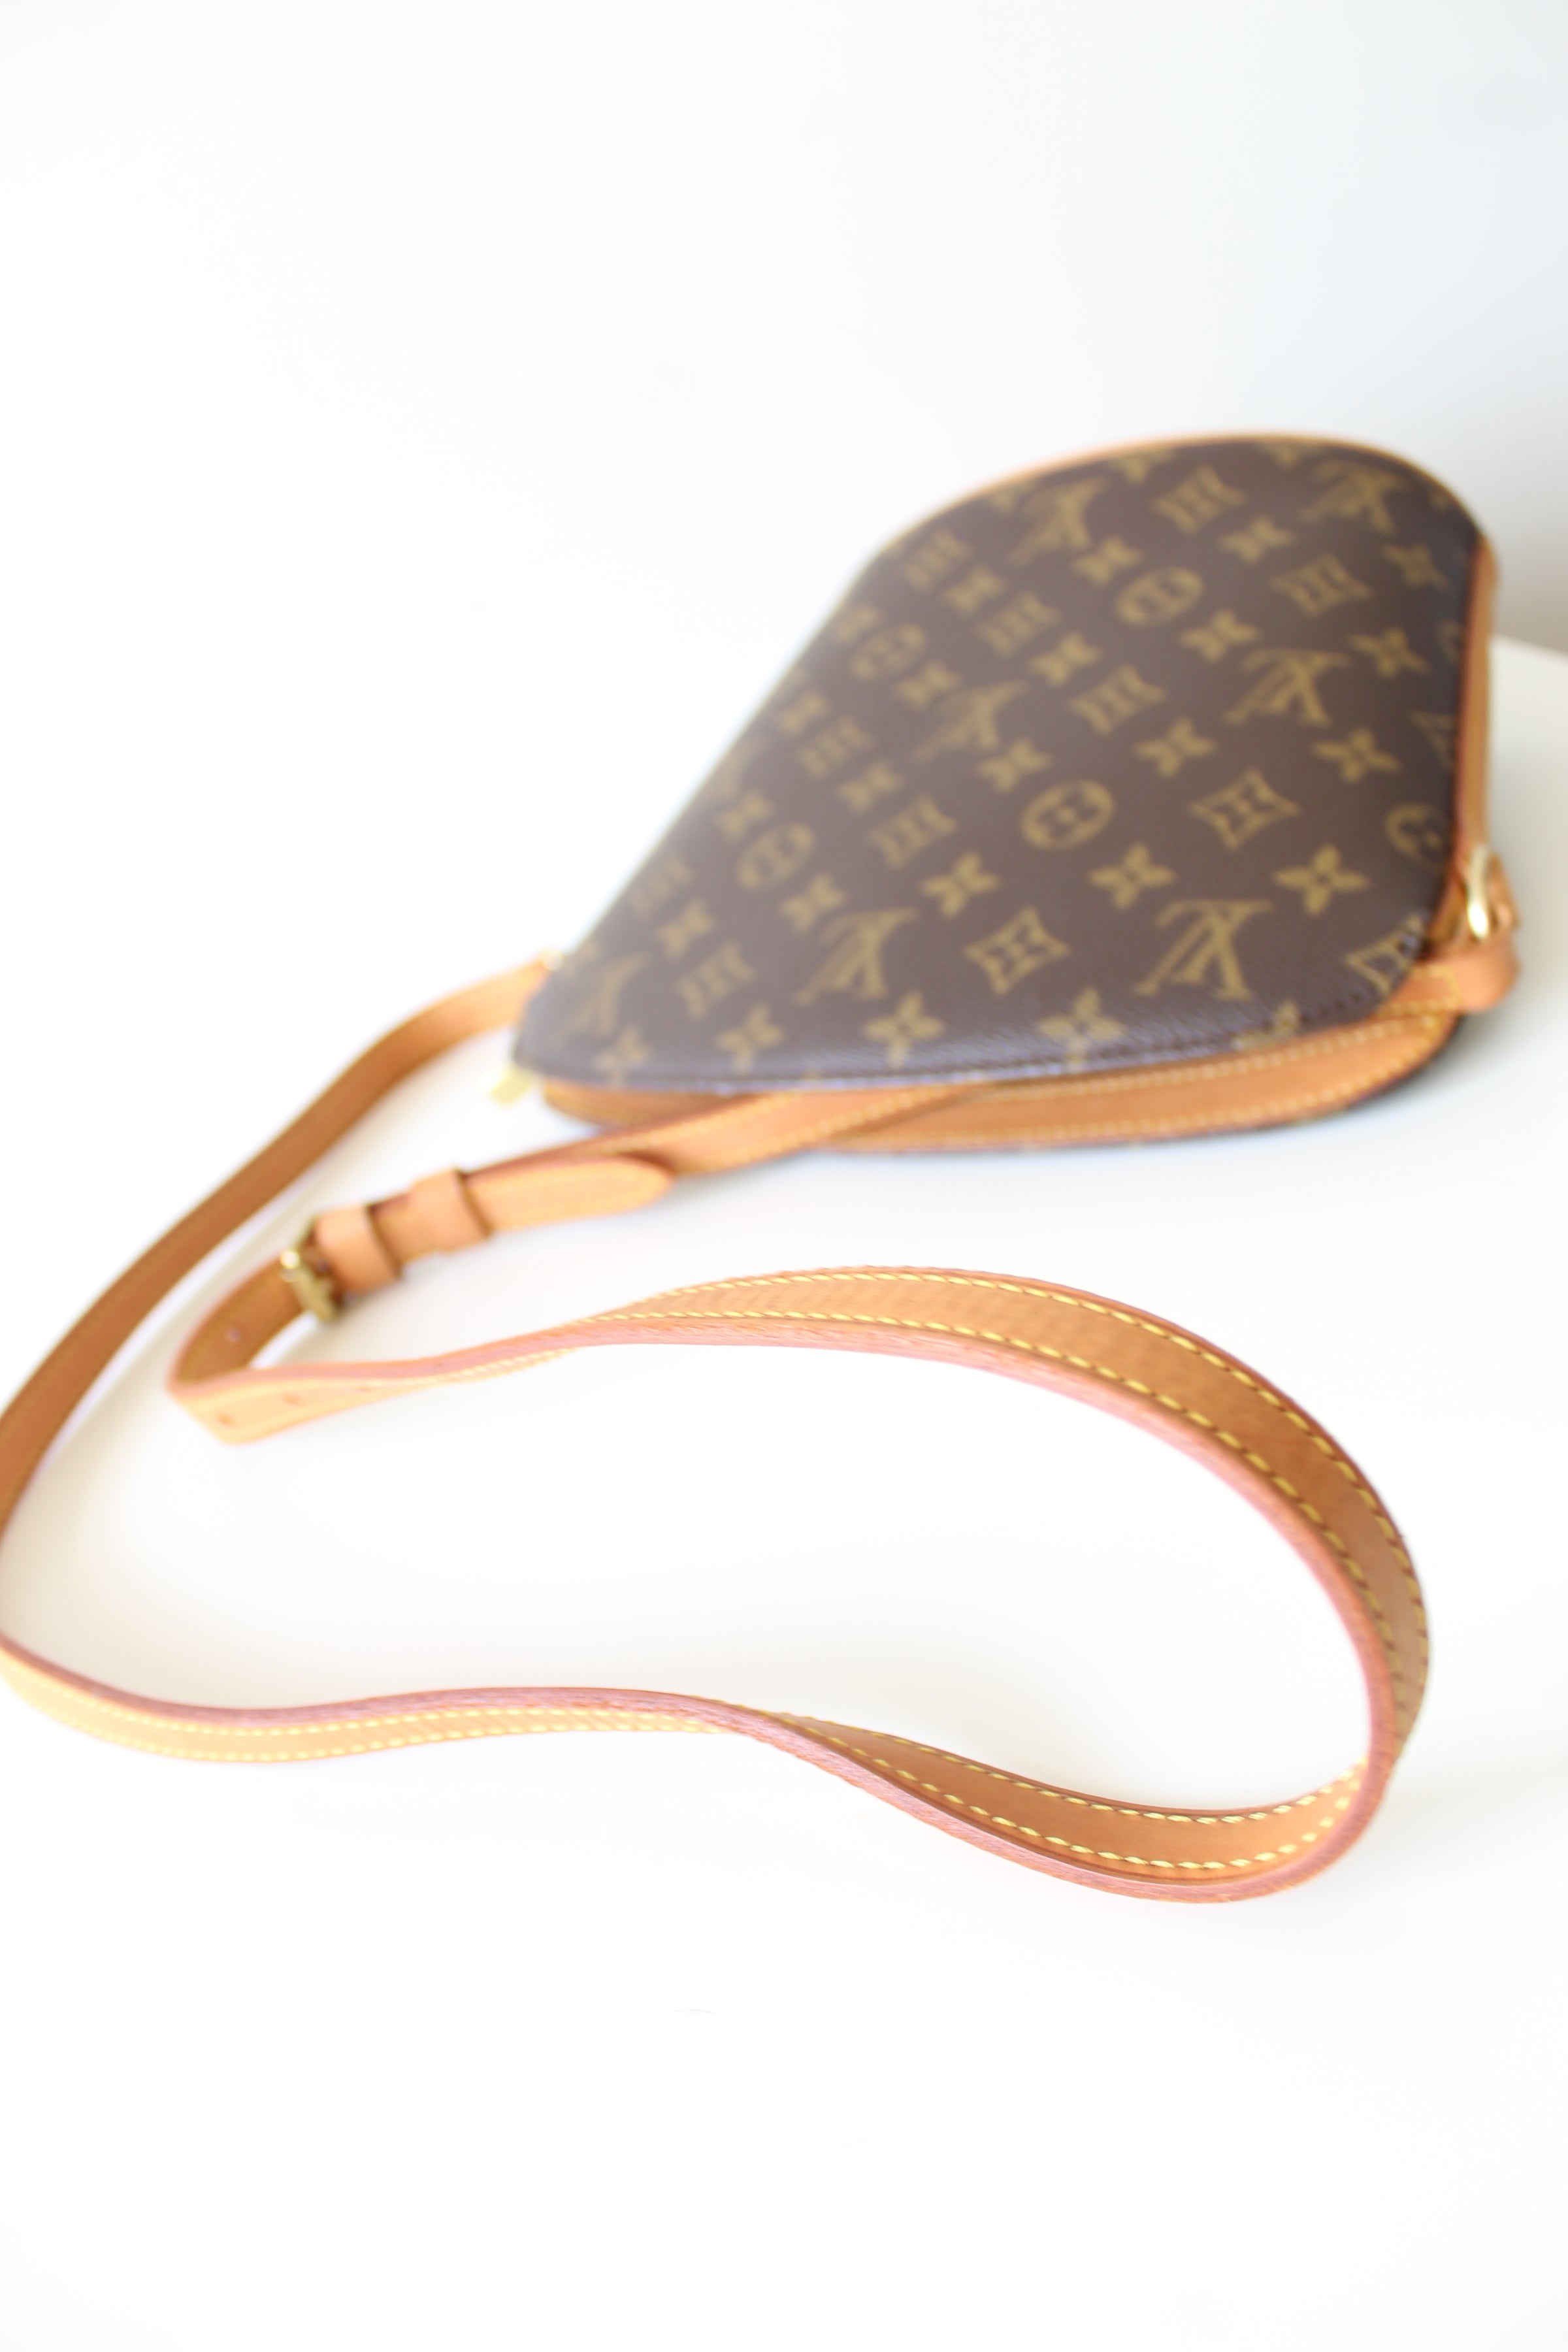 Louis Vuitton, Bags, Louis Vuitton Drouot Monogram Crossbody Bag